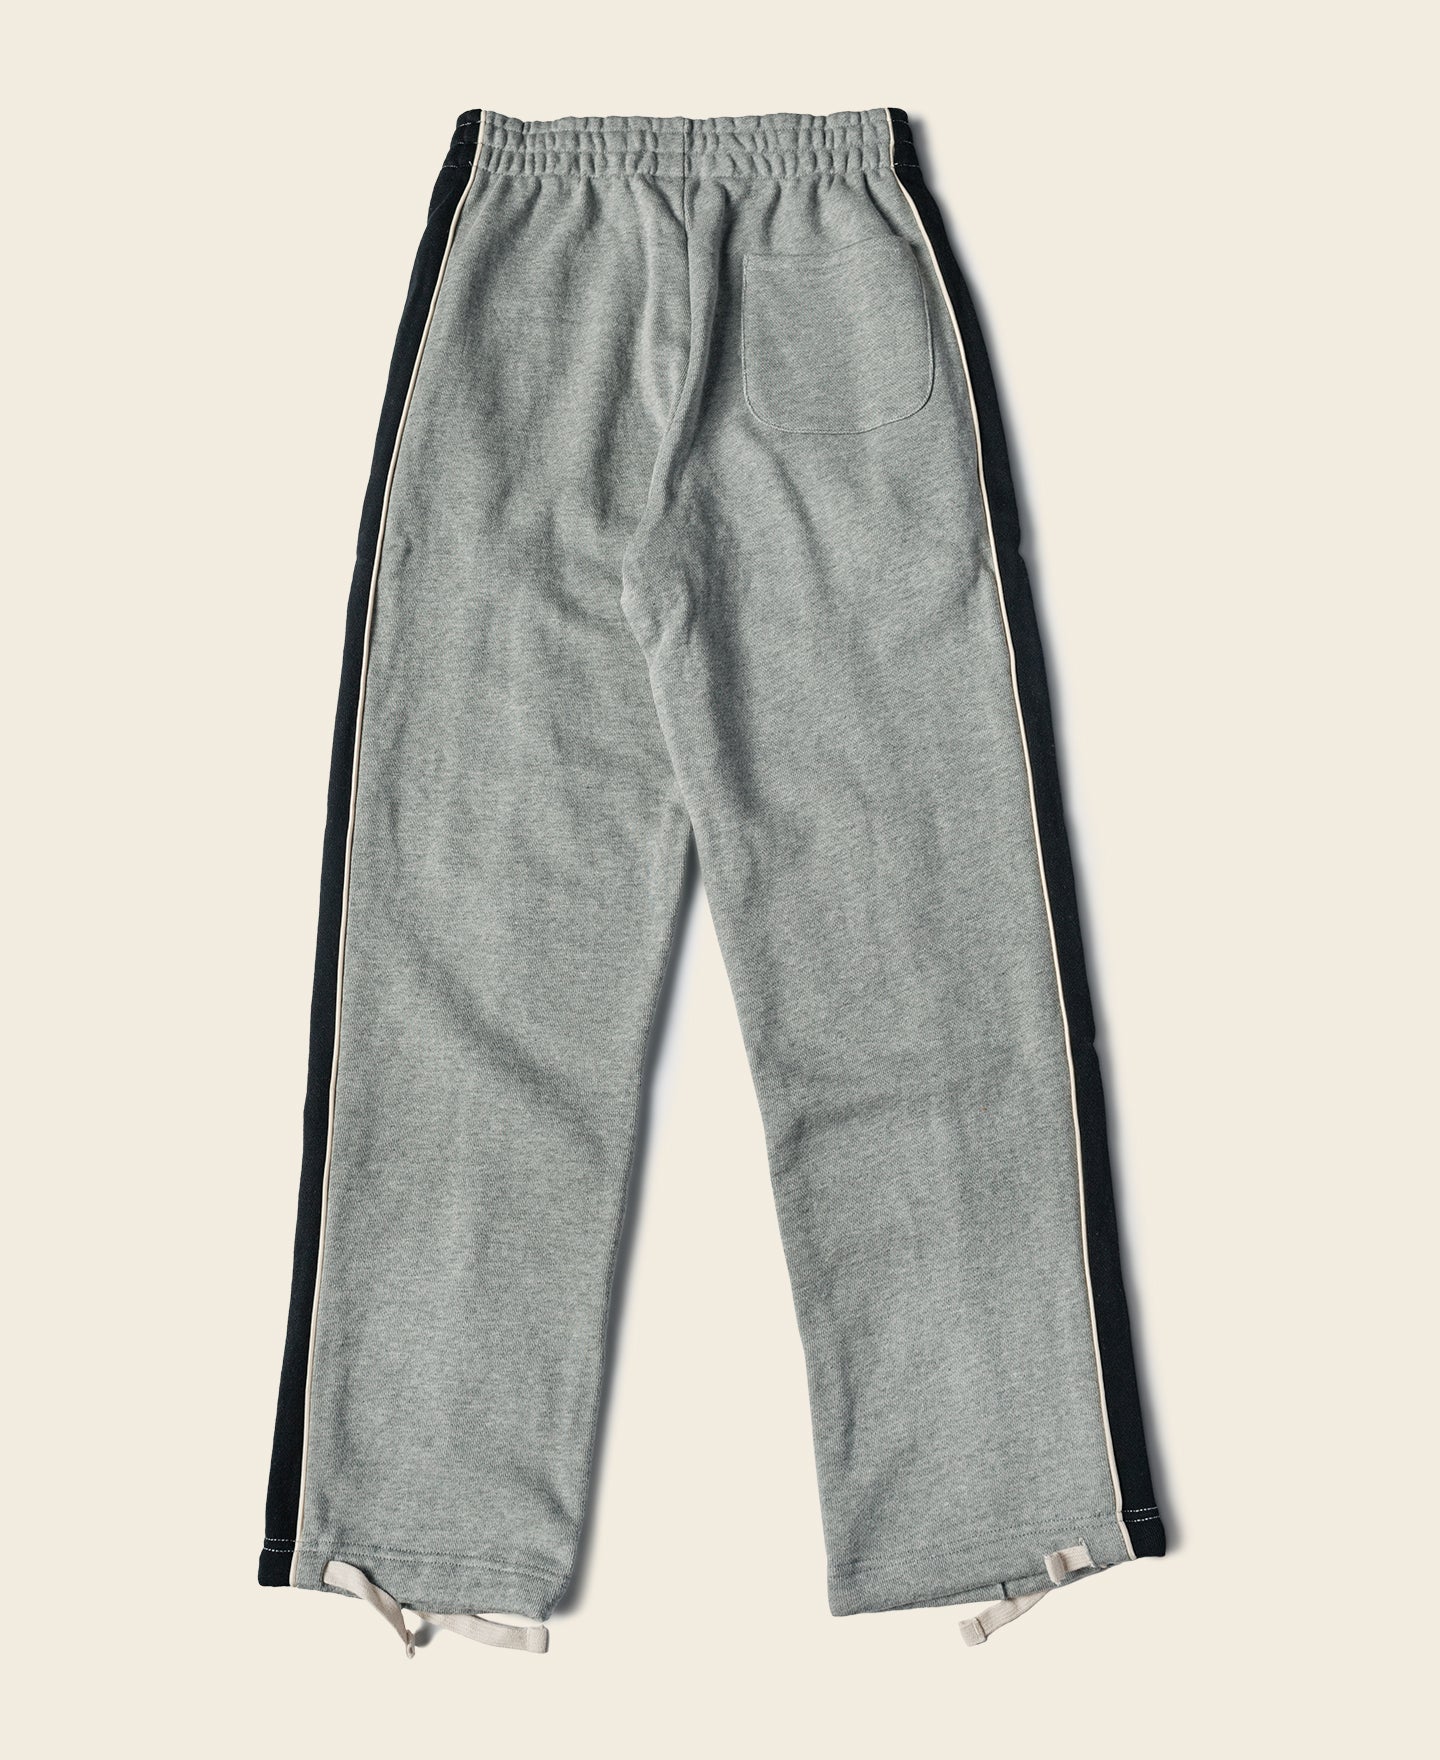 Classic Heavy Sweatpants 100% Cotton Navy